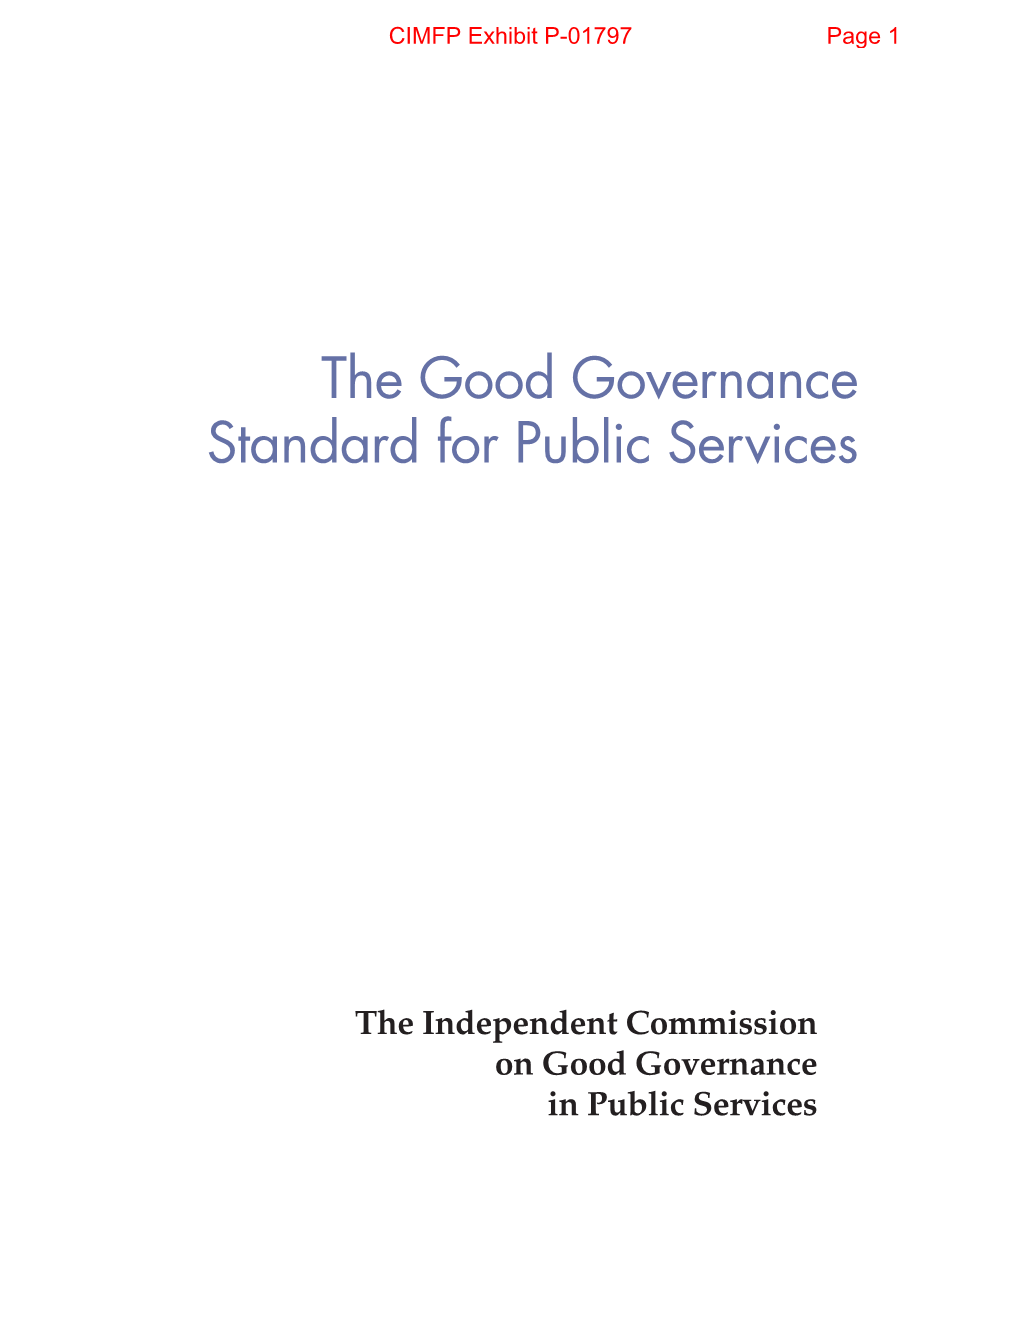 Good Governance Standard for Public Services